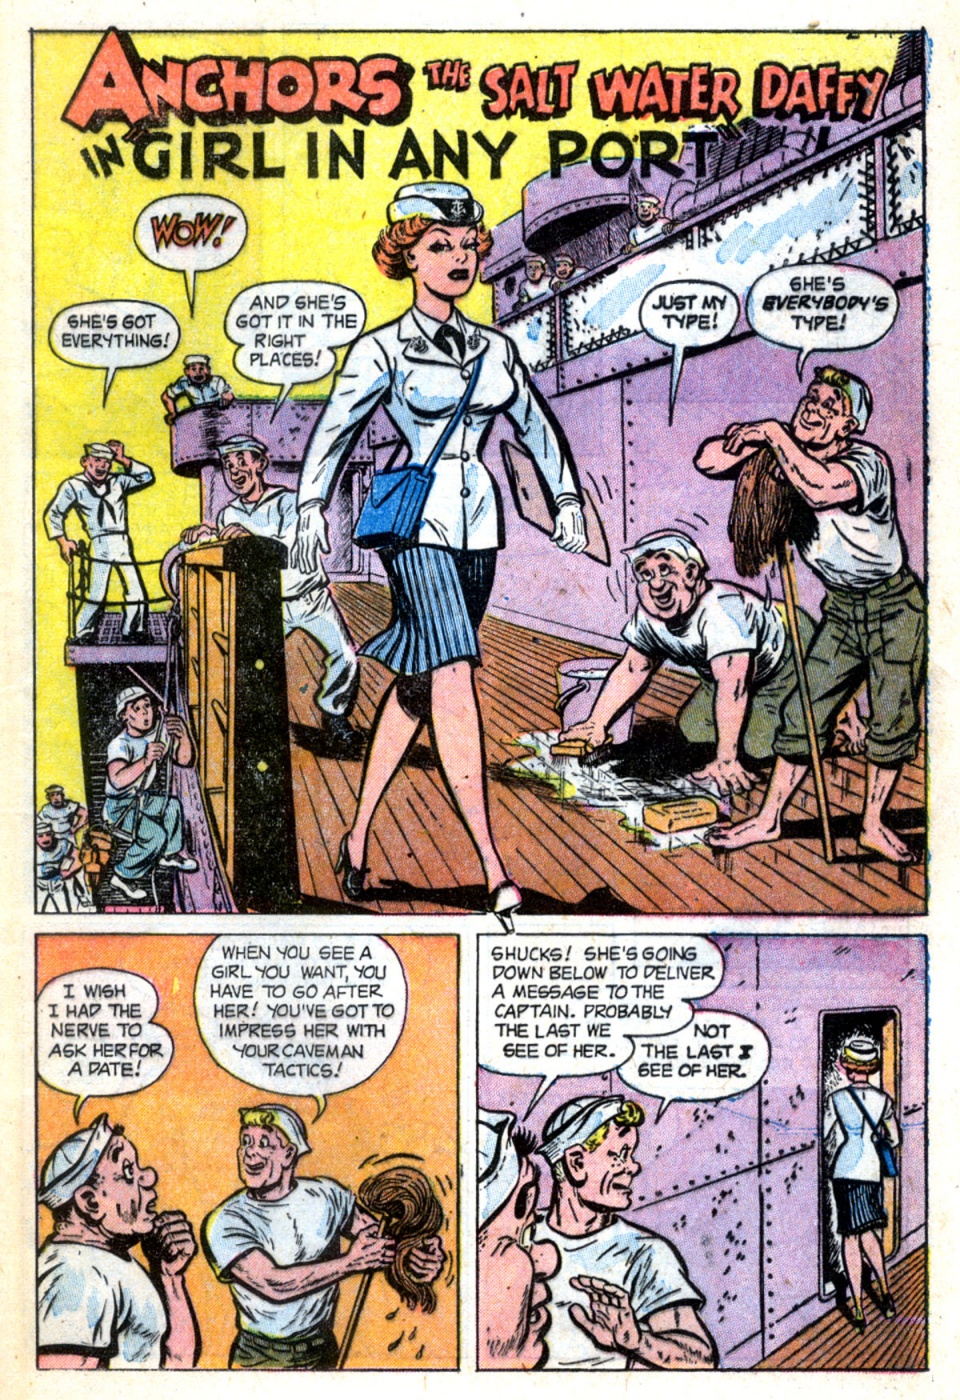 Anchors the Salt Water Daffy - Comics (21)